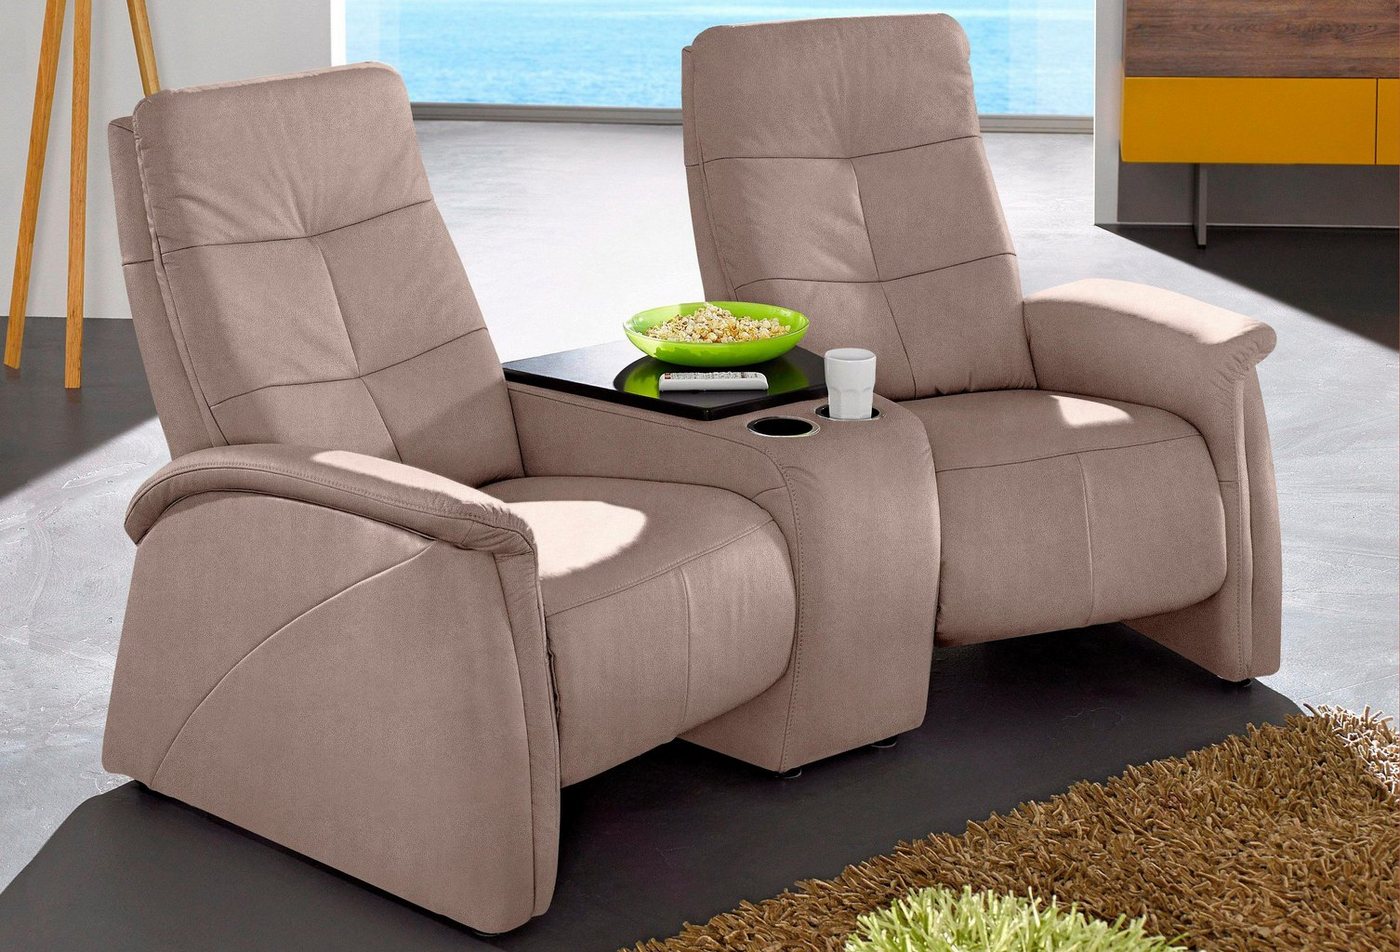 exxpo - sofa fashion 2-Sitzer Tivoli, mit Relaxfunktion, integrierter Tischablage und Stauraumfach von exxpo - sofa fashion